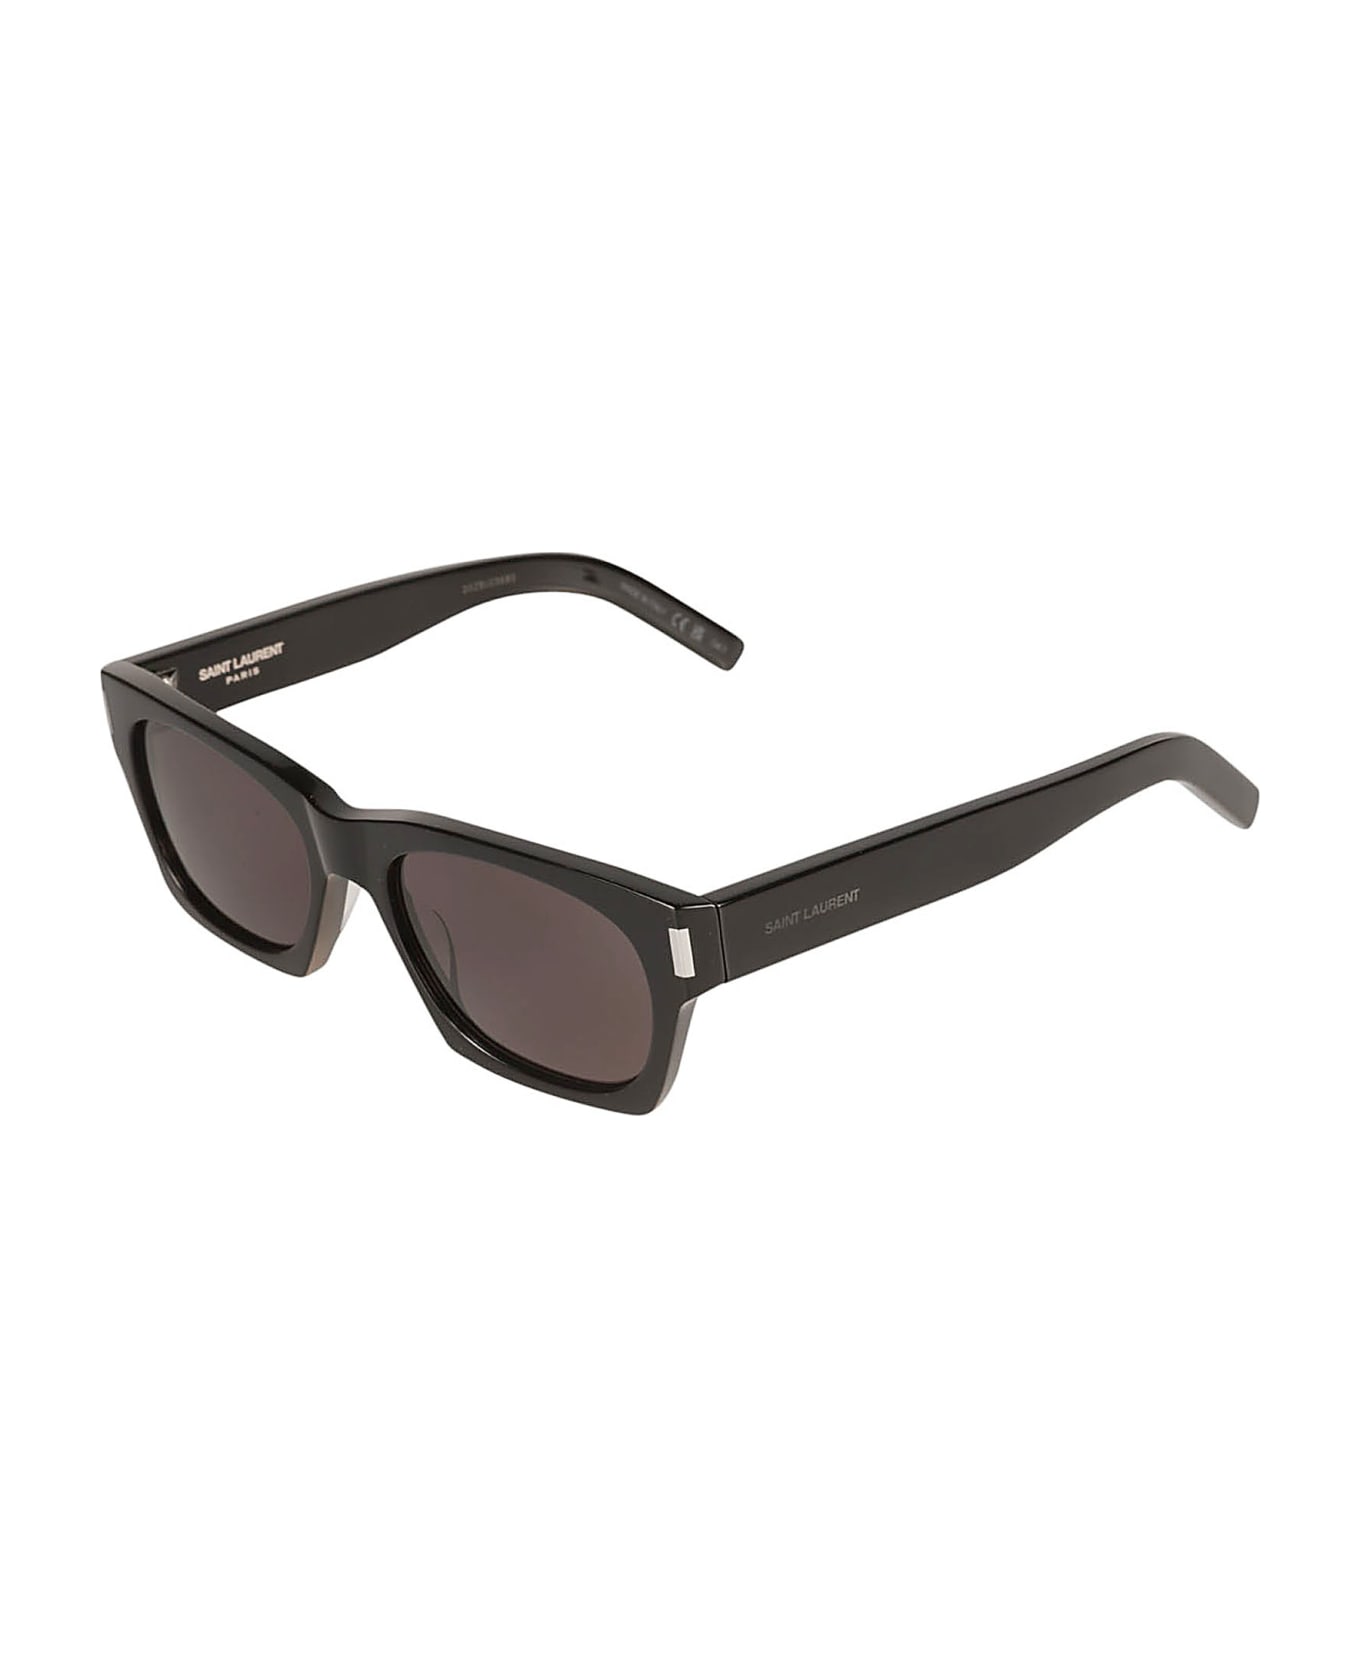 Saint Laurent Eyewear Square Frame Logo Sided Sunglasses - Black